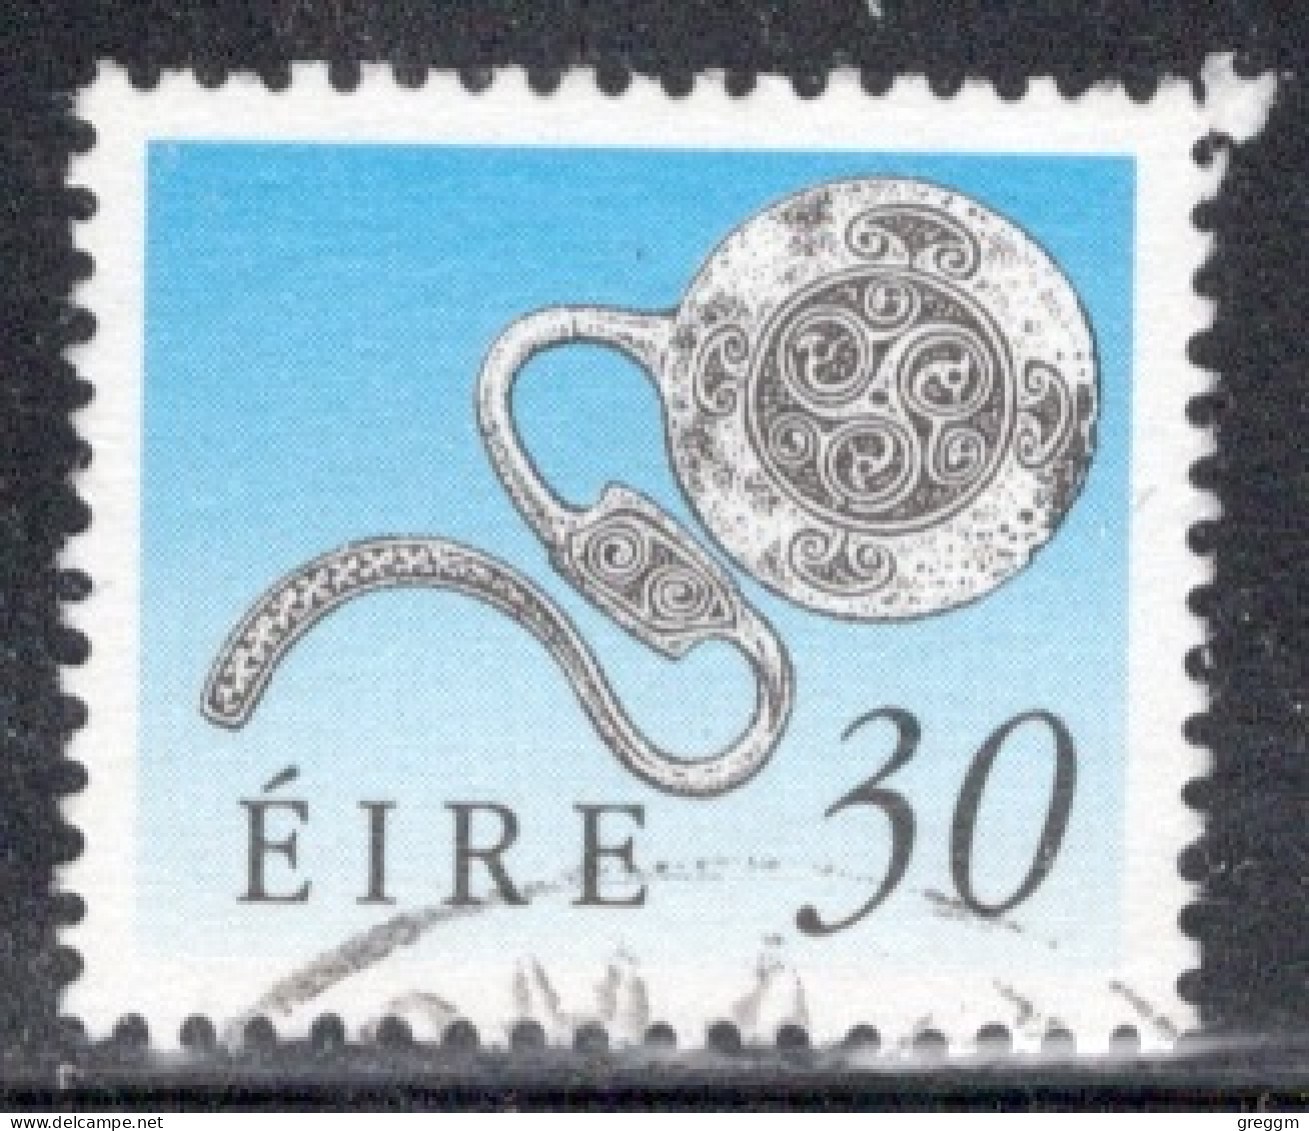 Ireland 1990 Single Stamp From The Irish Art Treasures Set In Fine Used - Gebraucht